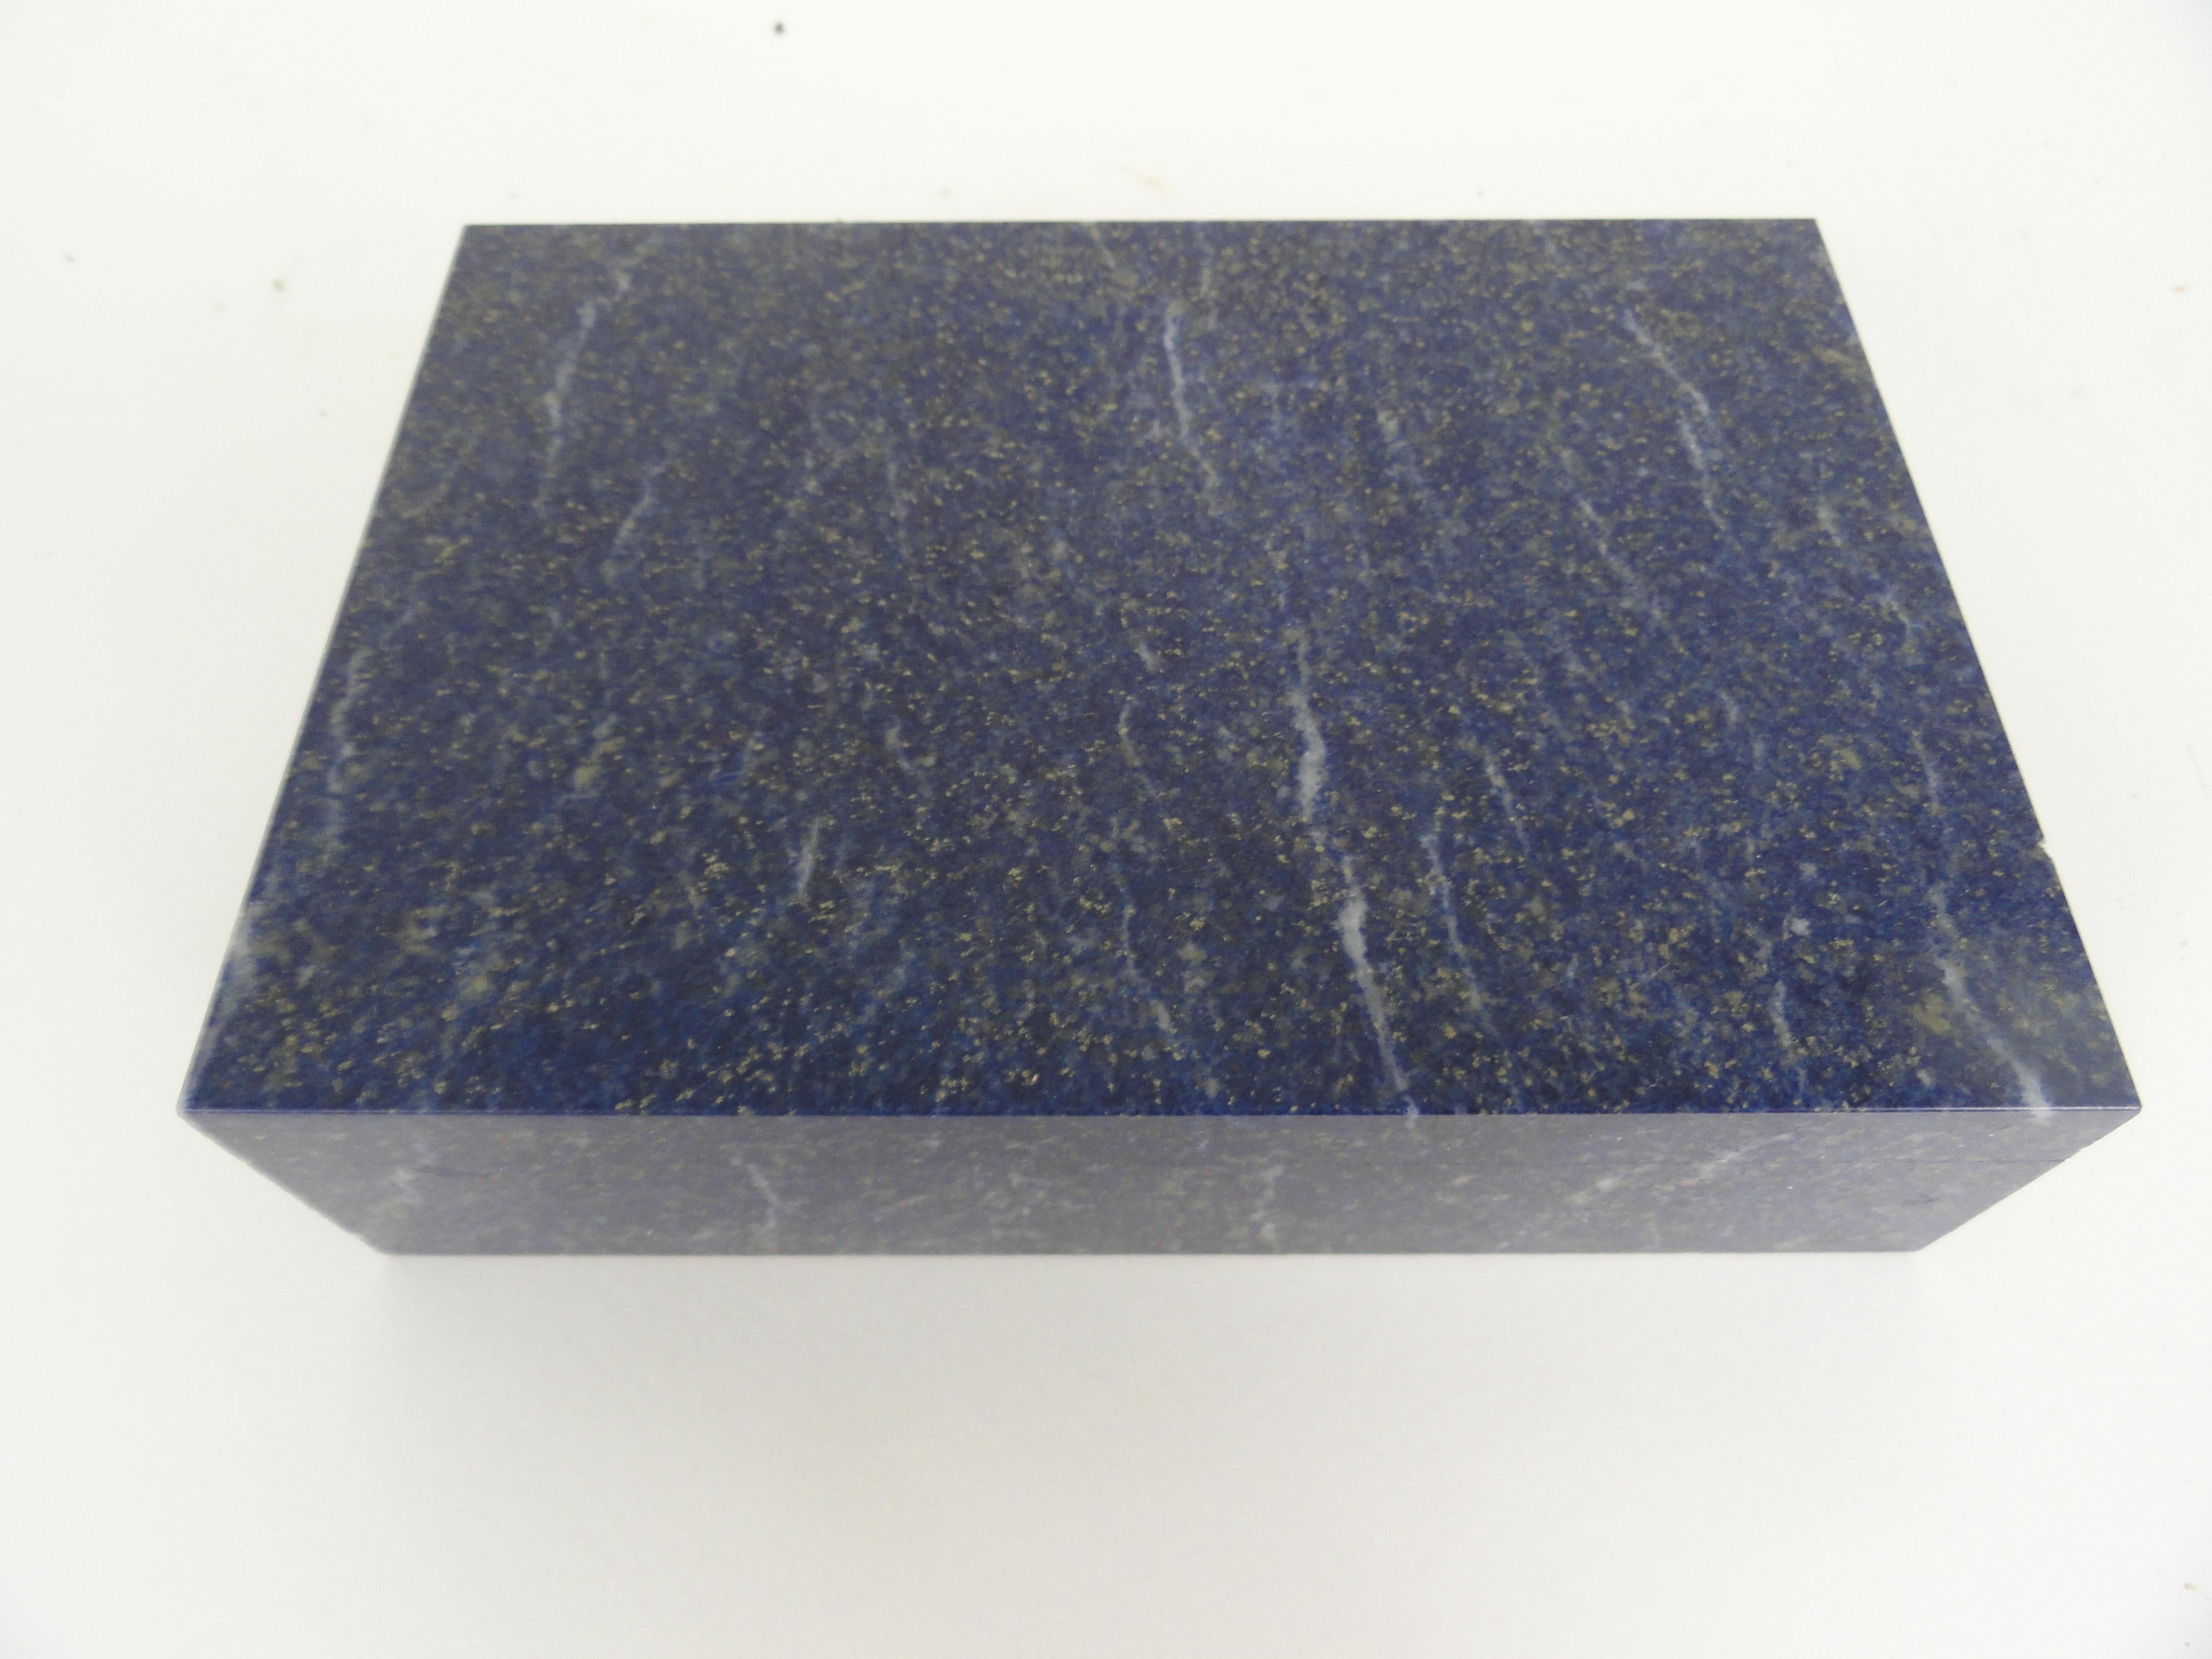 Italian Lapis Lazuli box, naturally colored stone with Vermeil hinging and felt interior.